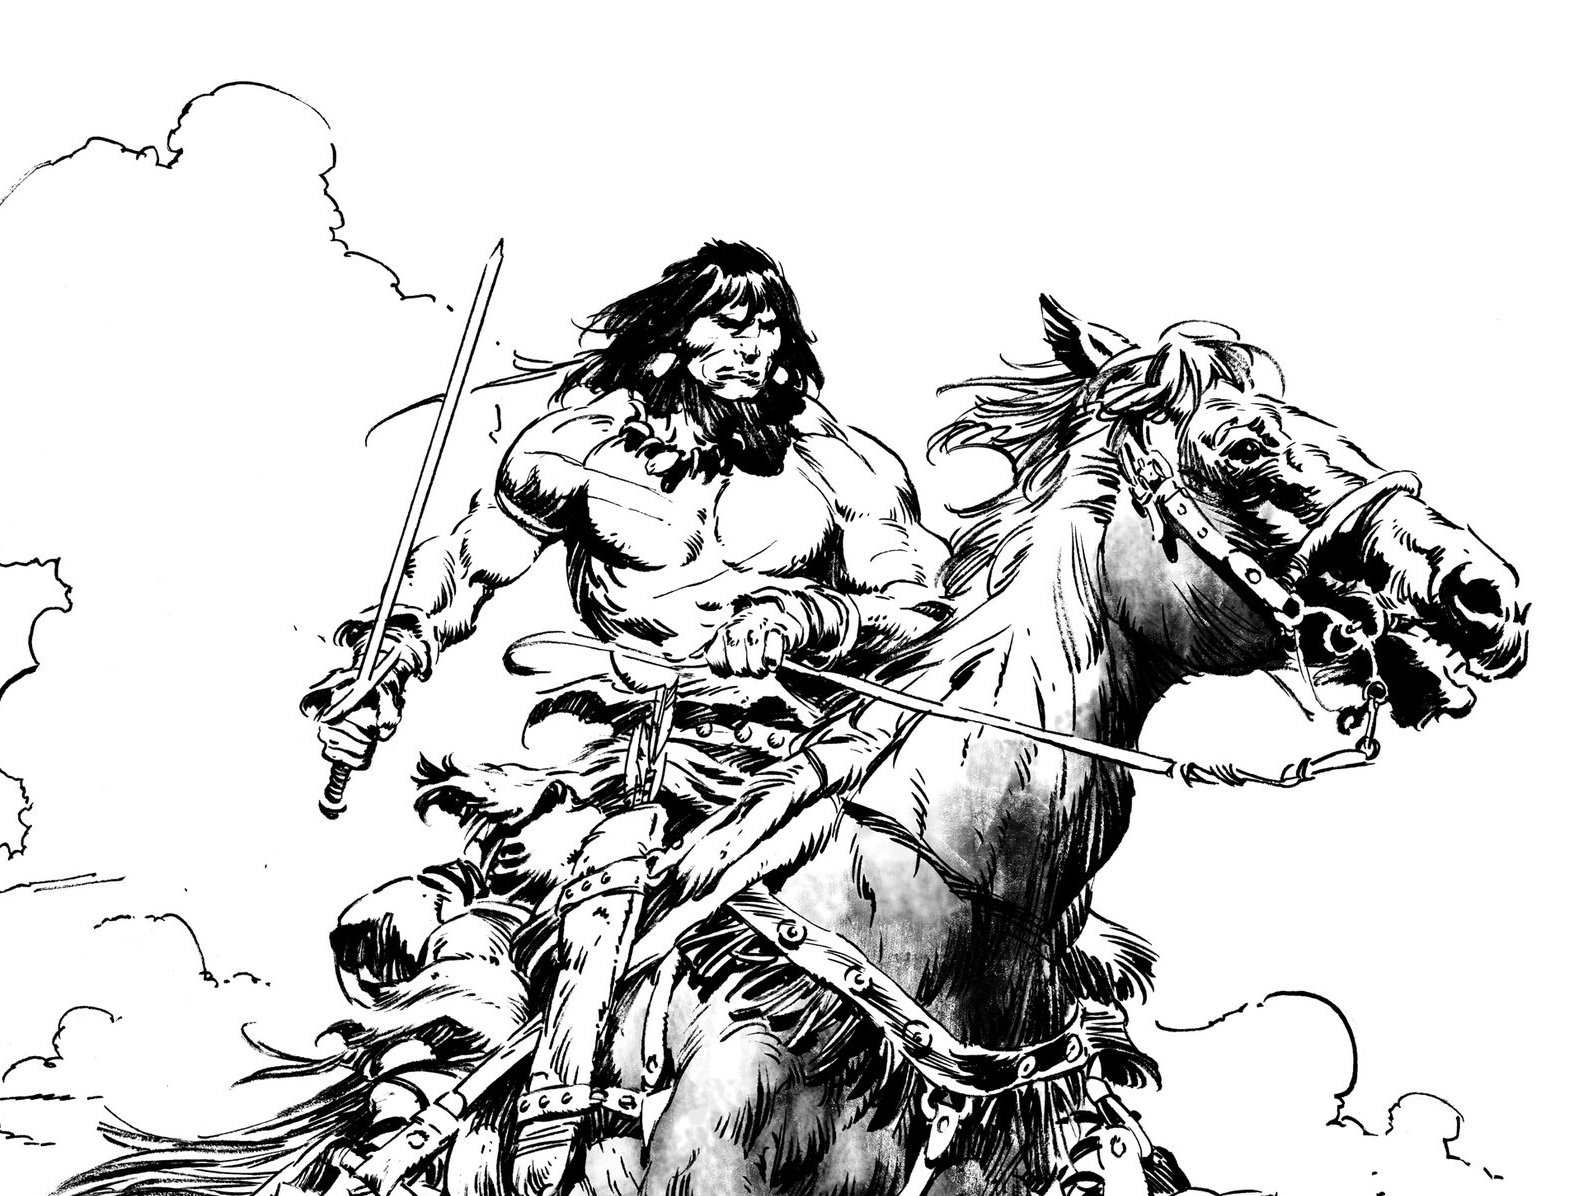 New ongoing 'Conan the Barbarian' series creative team announced